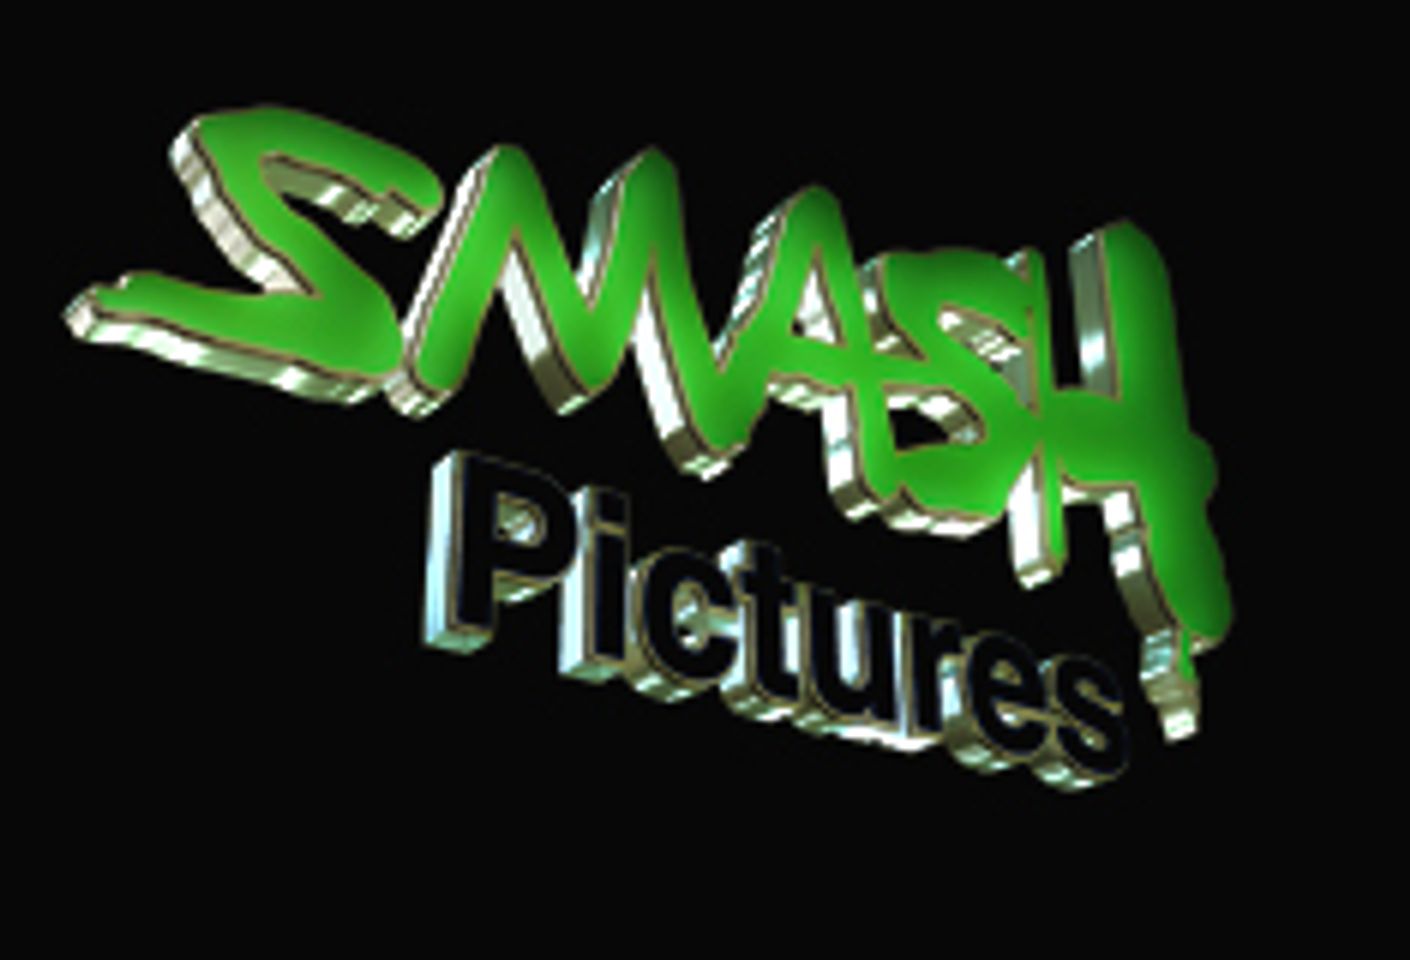 Smash Pictures Creates New Online Sites with HushMoney.com